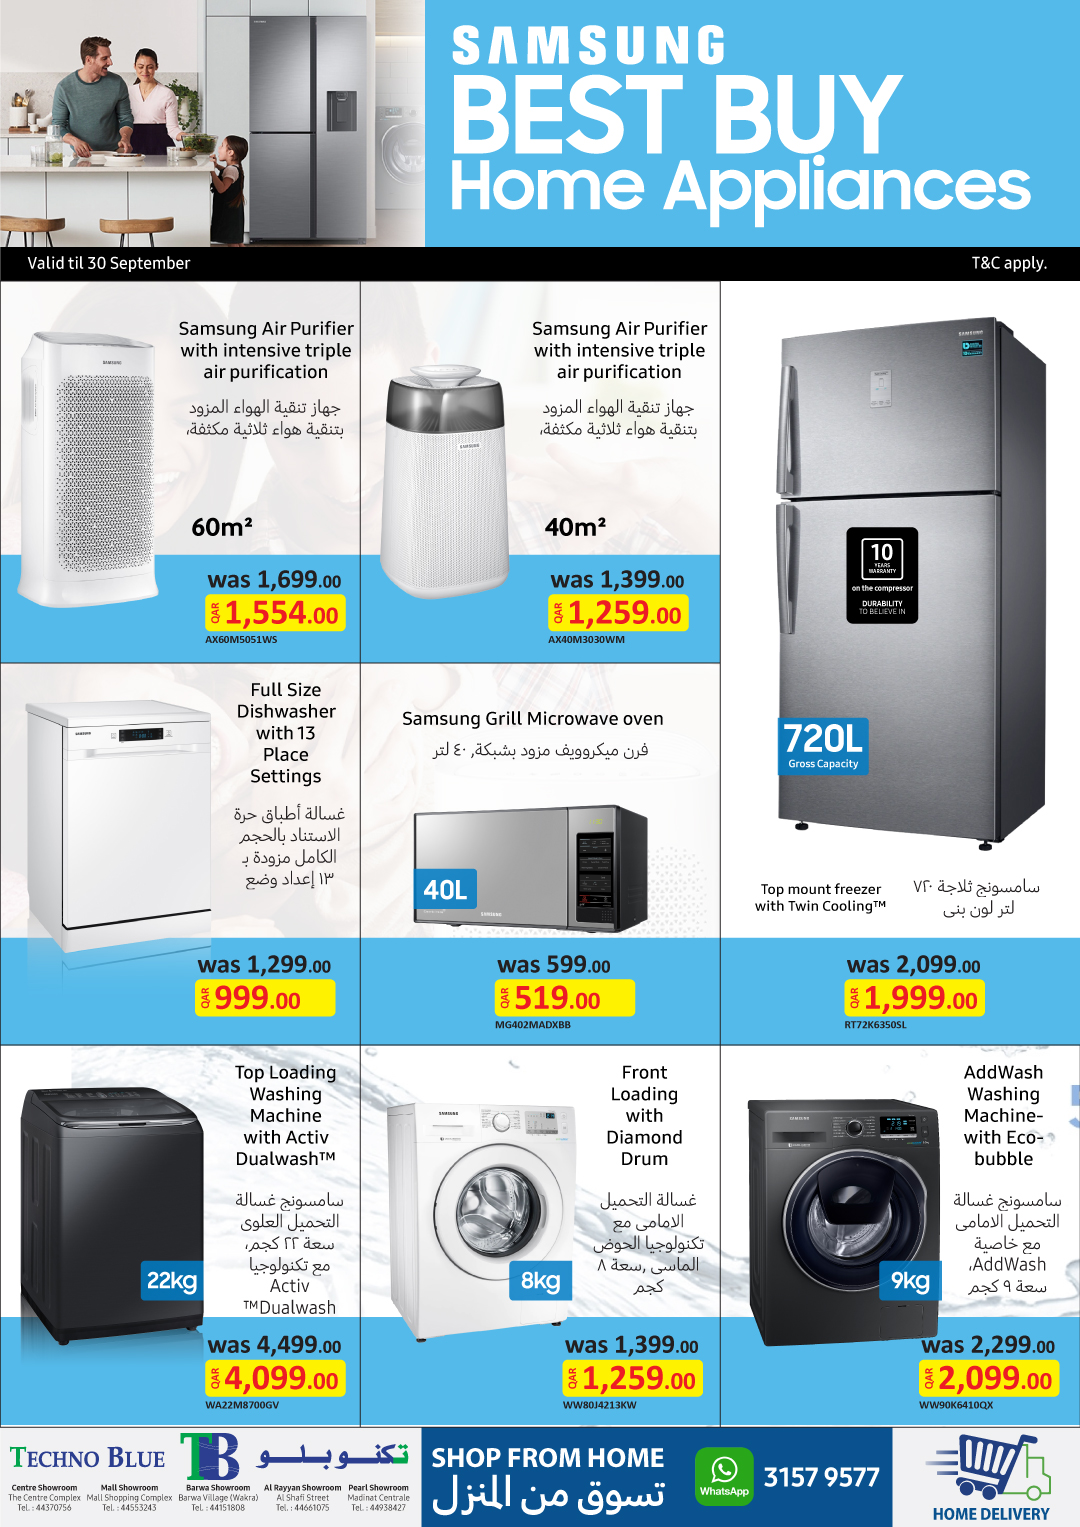 Samsung Best Buy Home Appliances